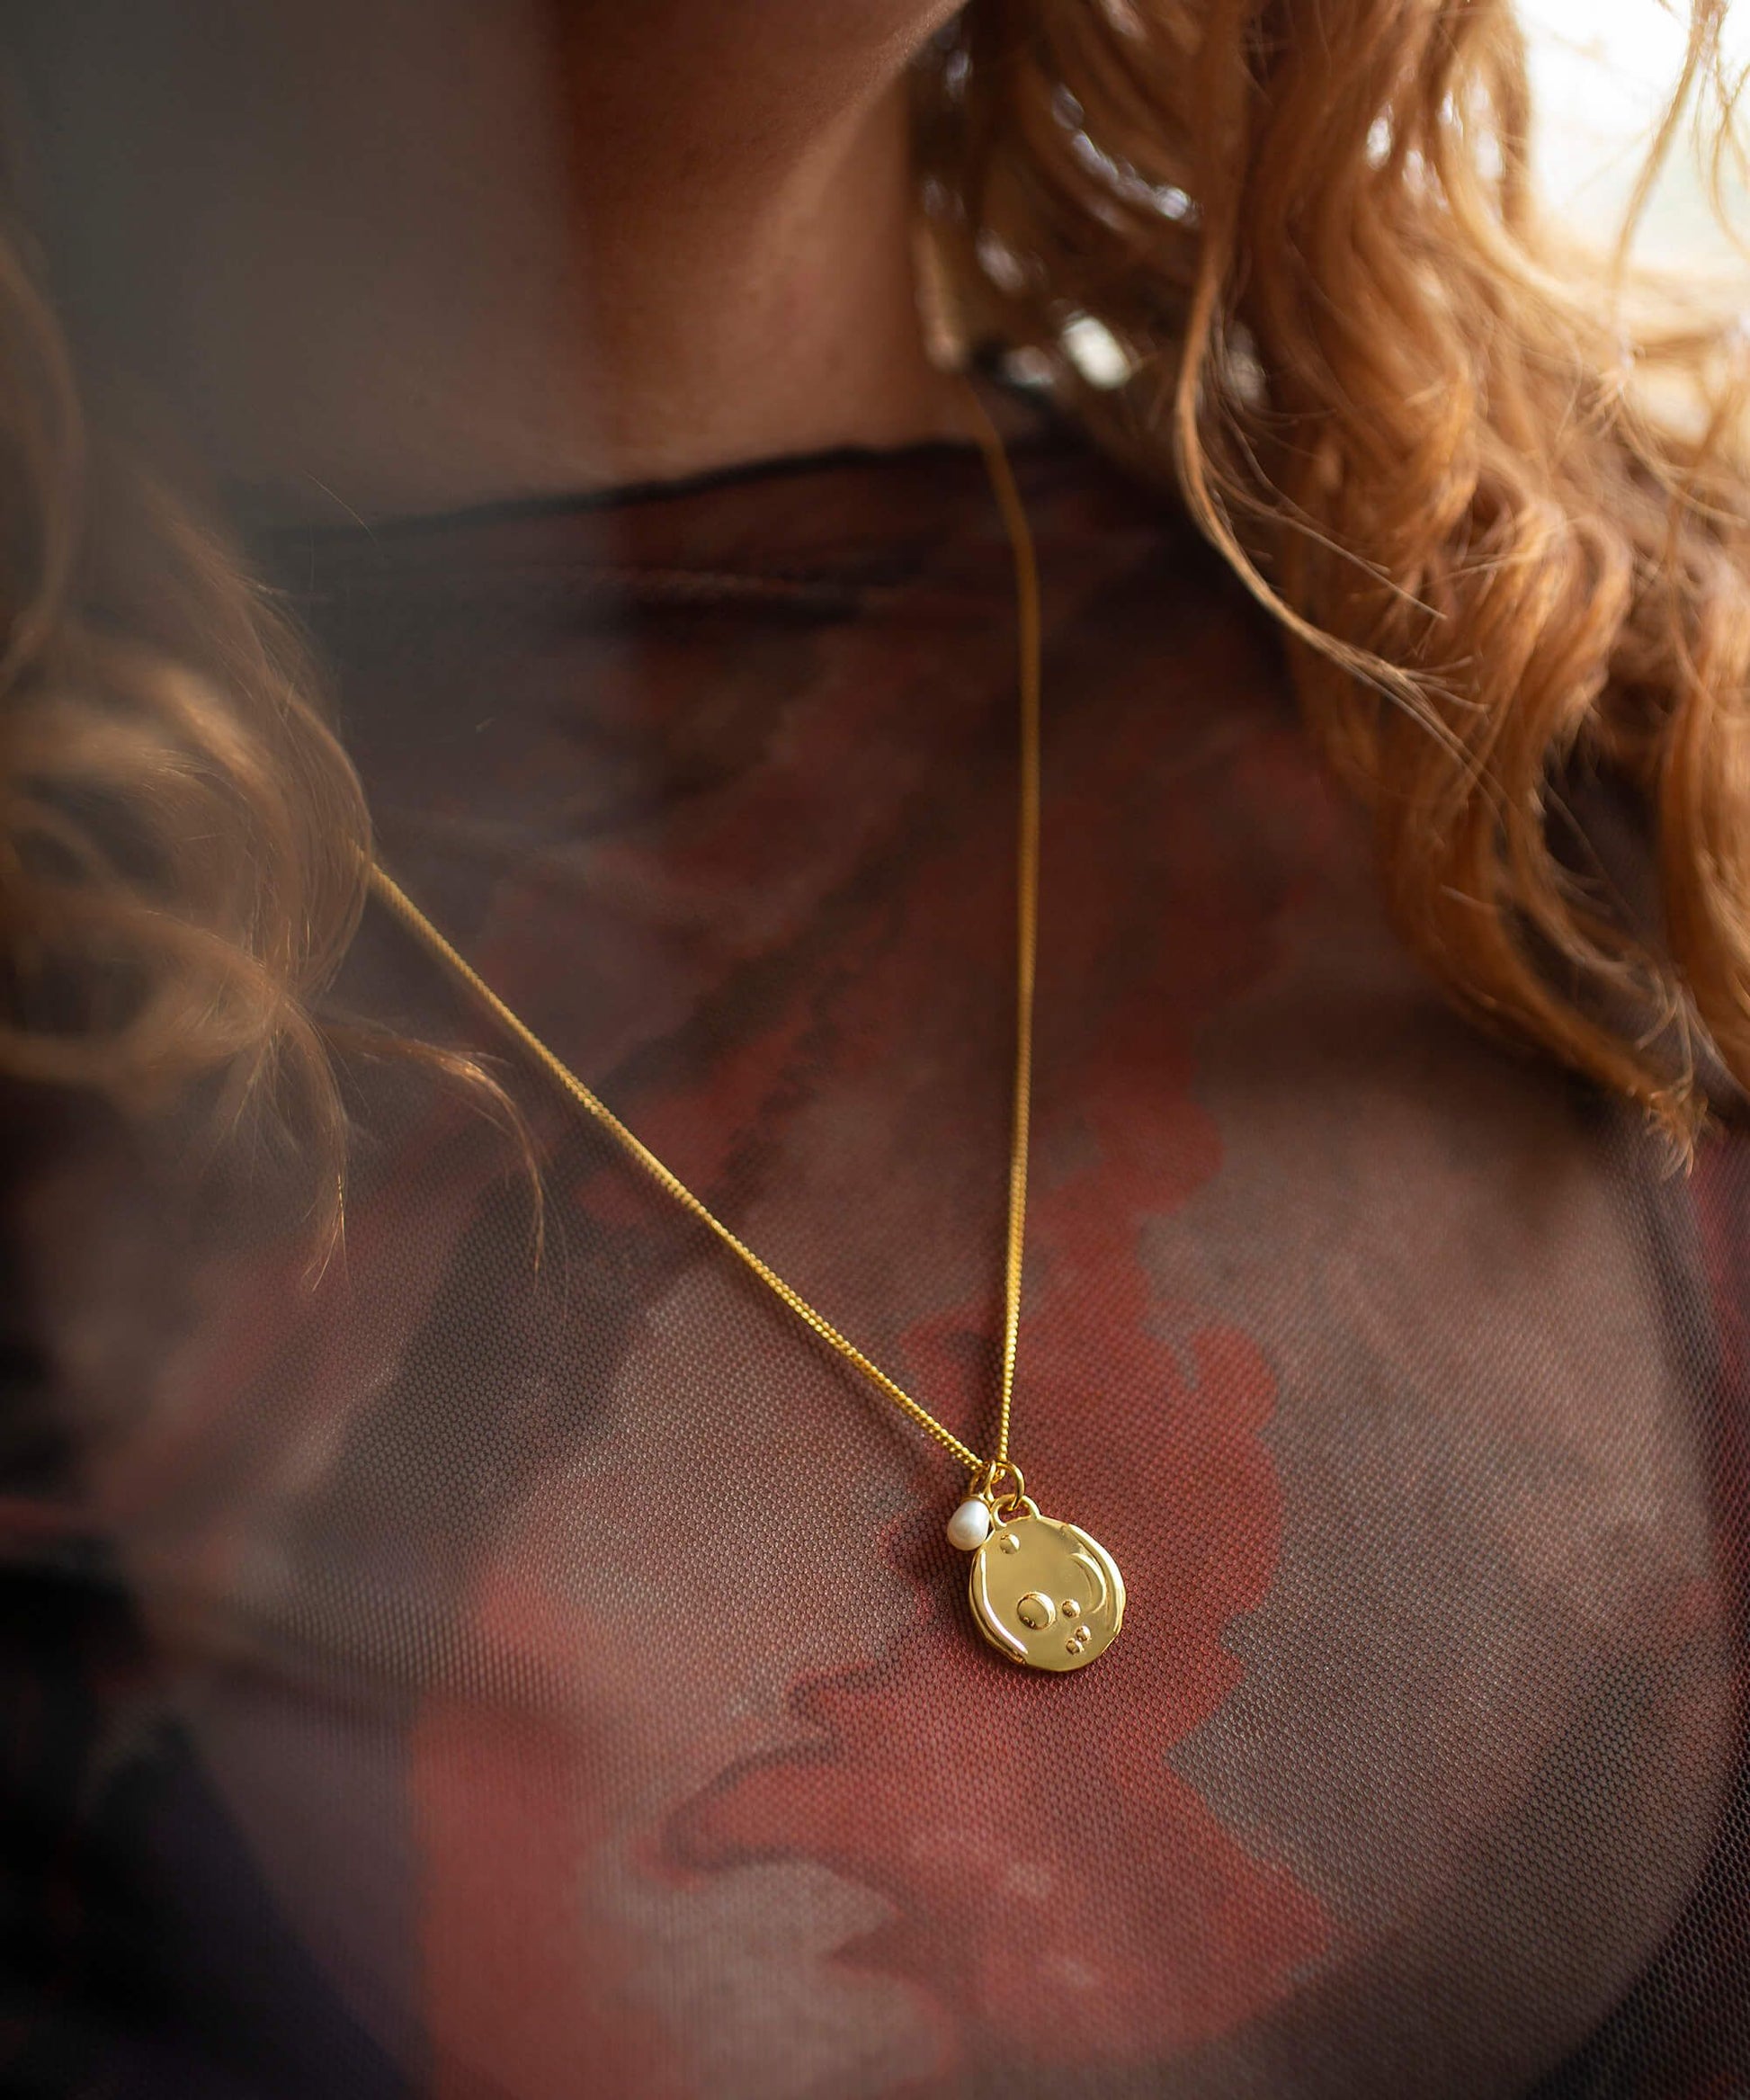 Cancer gold zodiac necklace